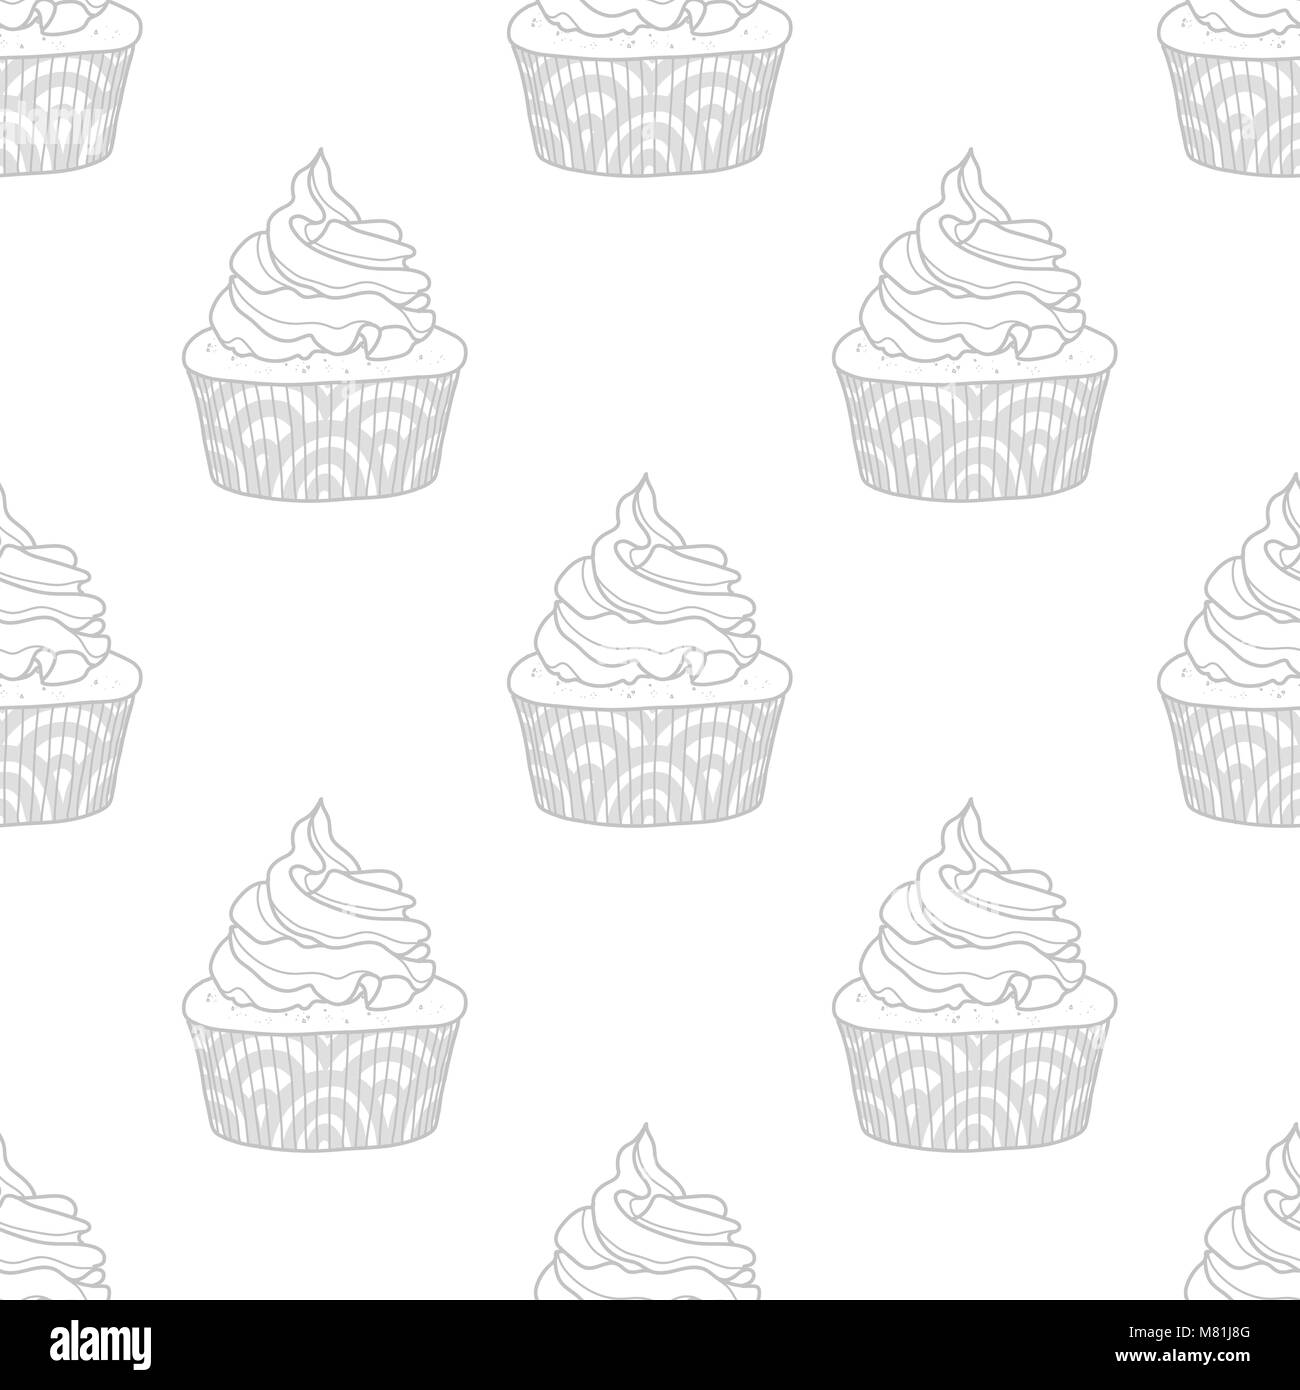 Light gray cupcakes random on white background. Cute hand drawn seamless pattern design of dessert in rpastel outline. Stock Vector